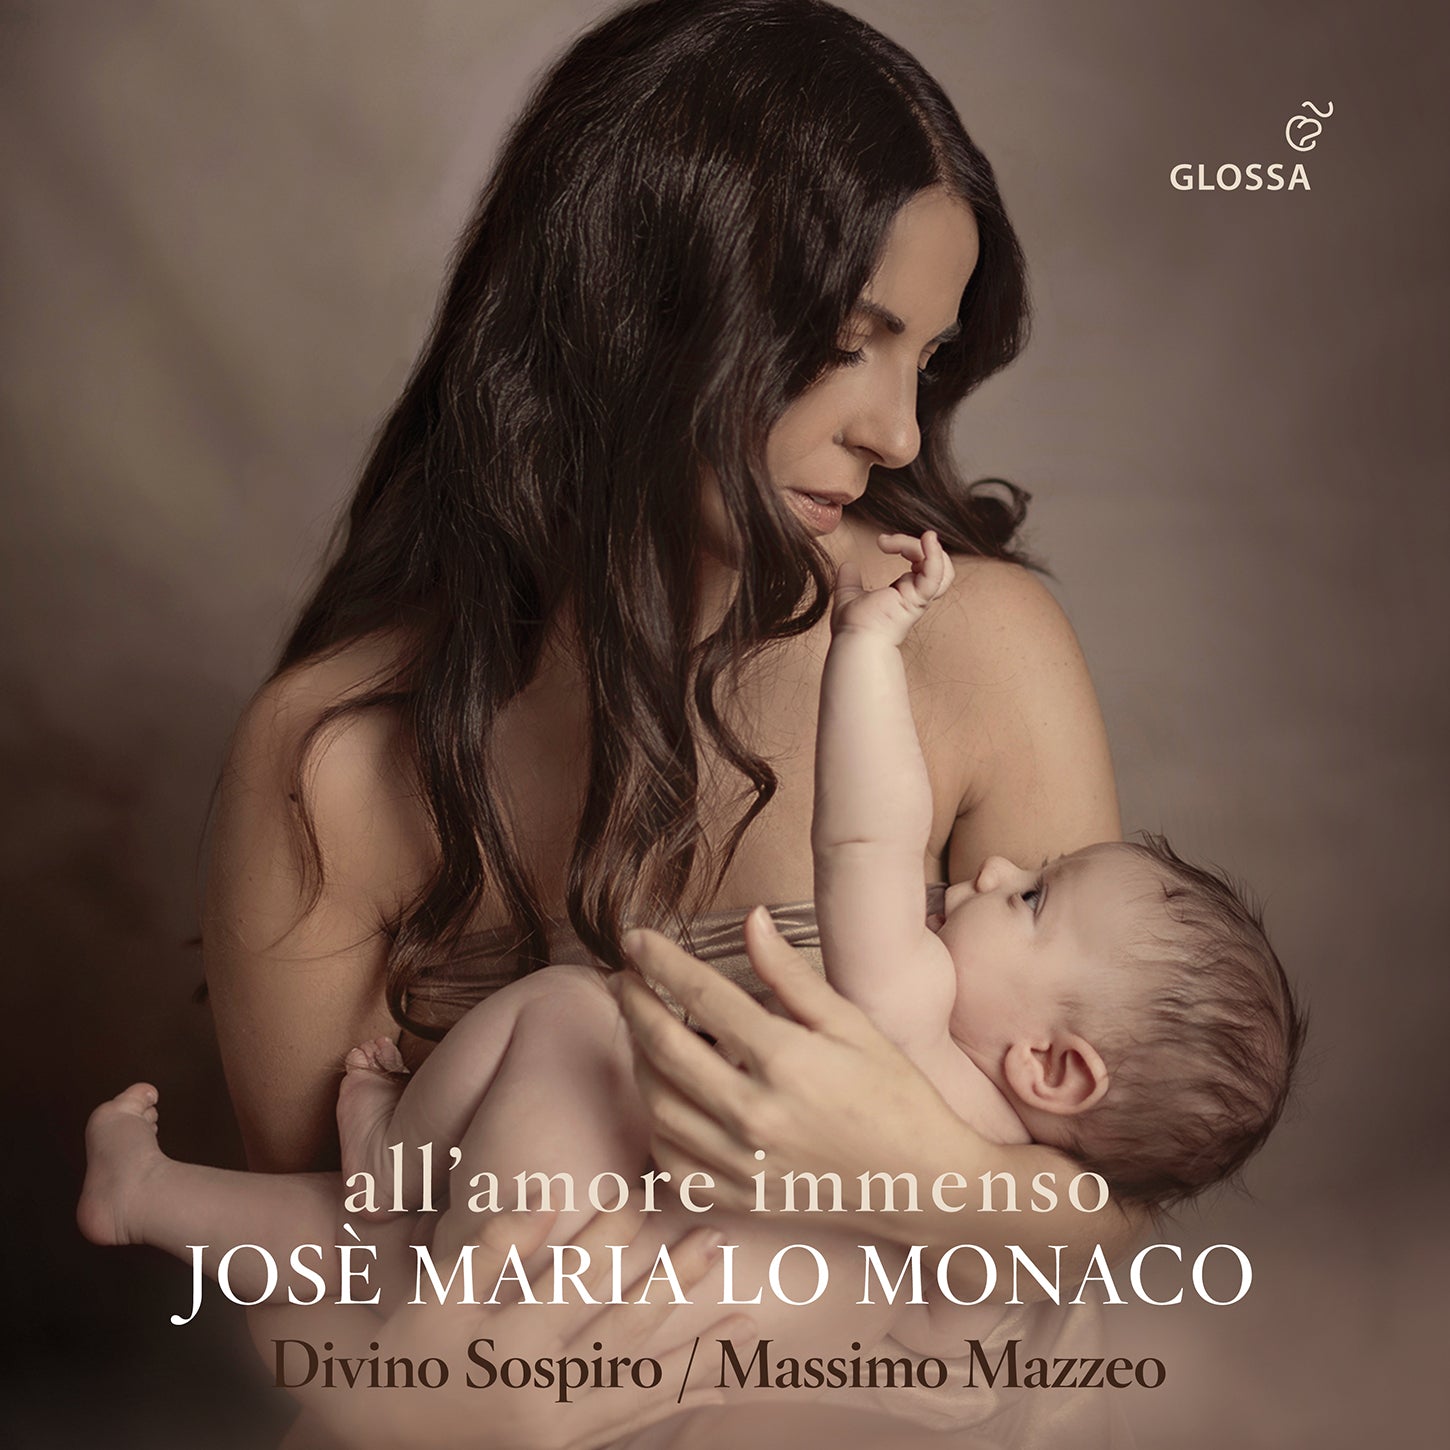 All'amore immenso: Music for the Virgin & Mary Magdalene / Monaco, Mazzeo, Divino Sospiro